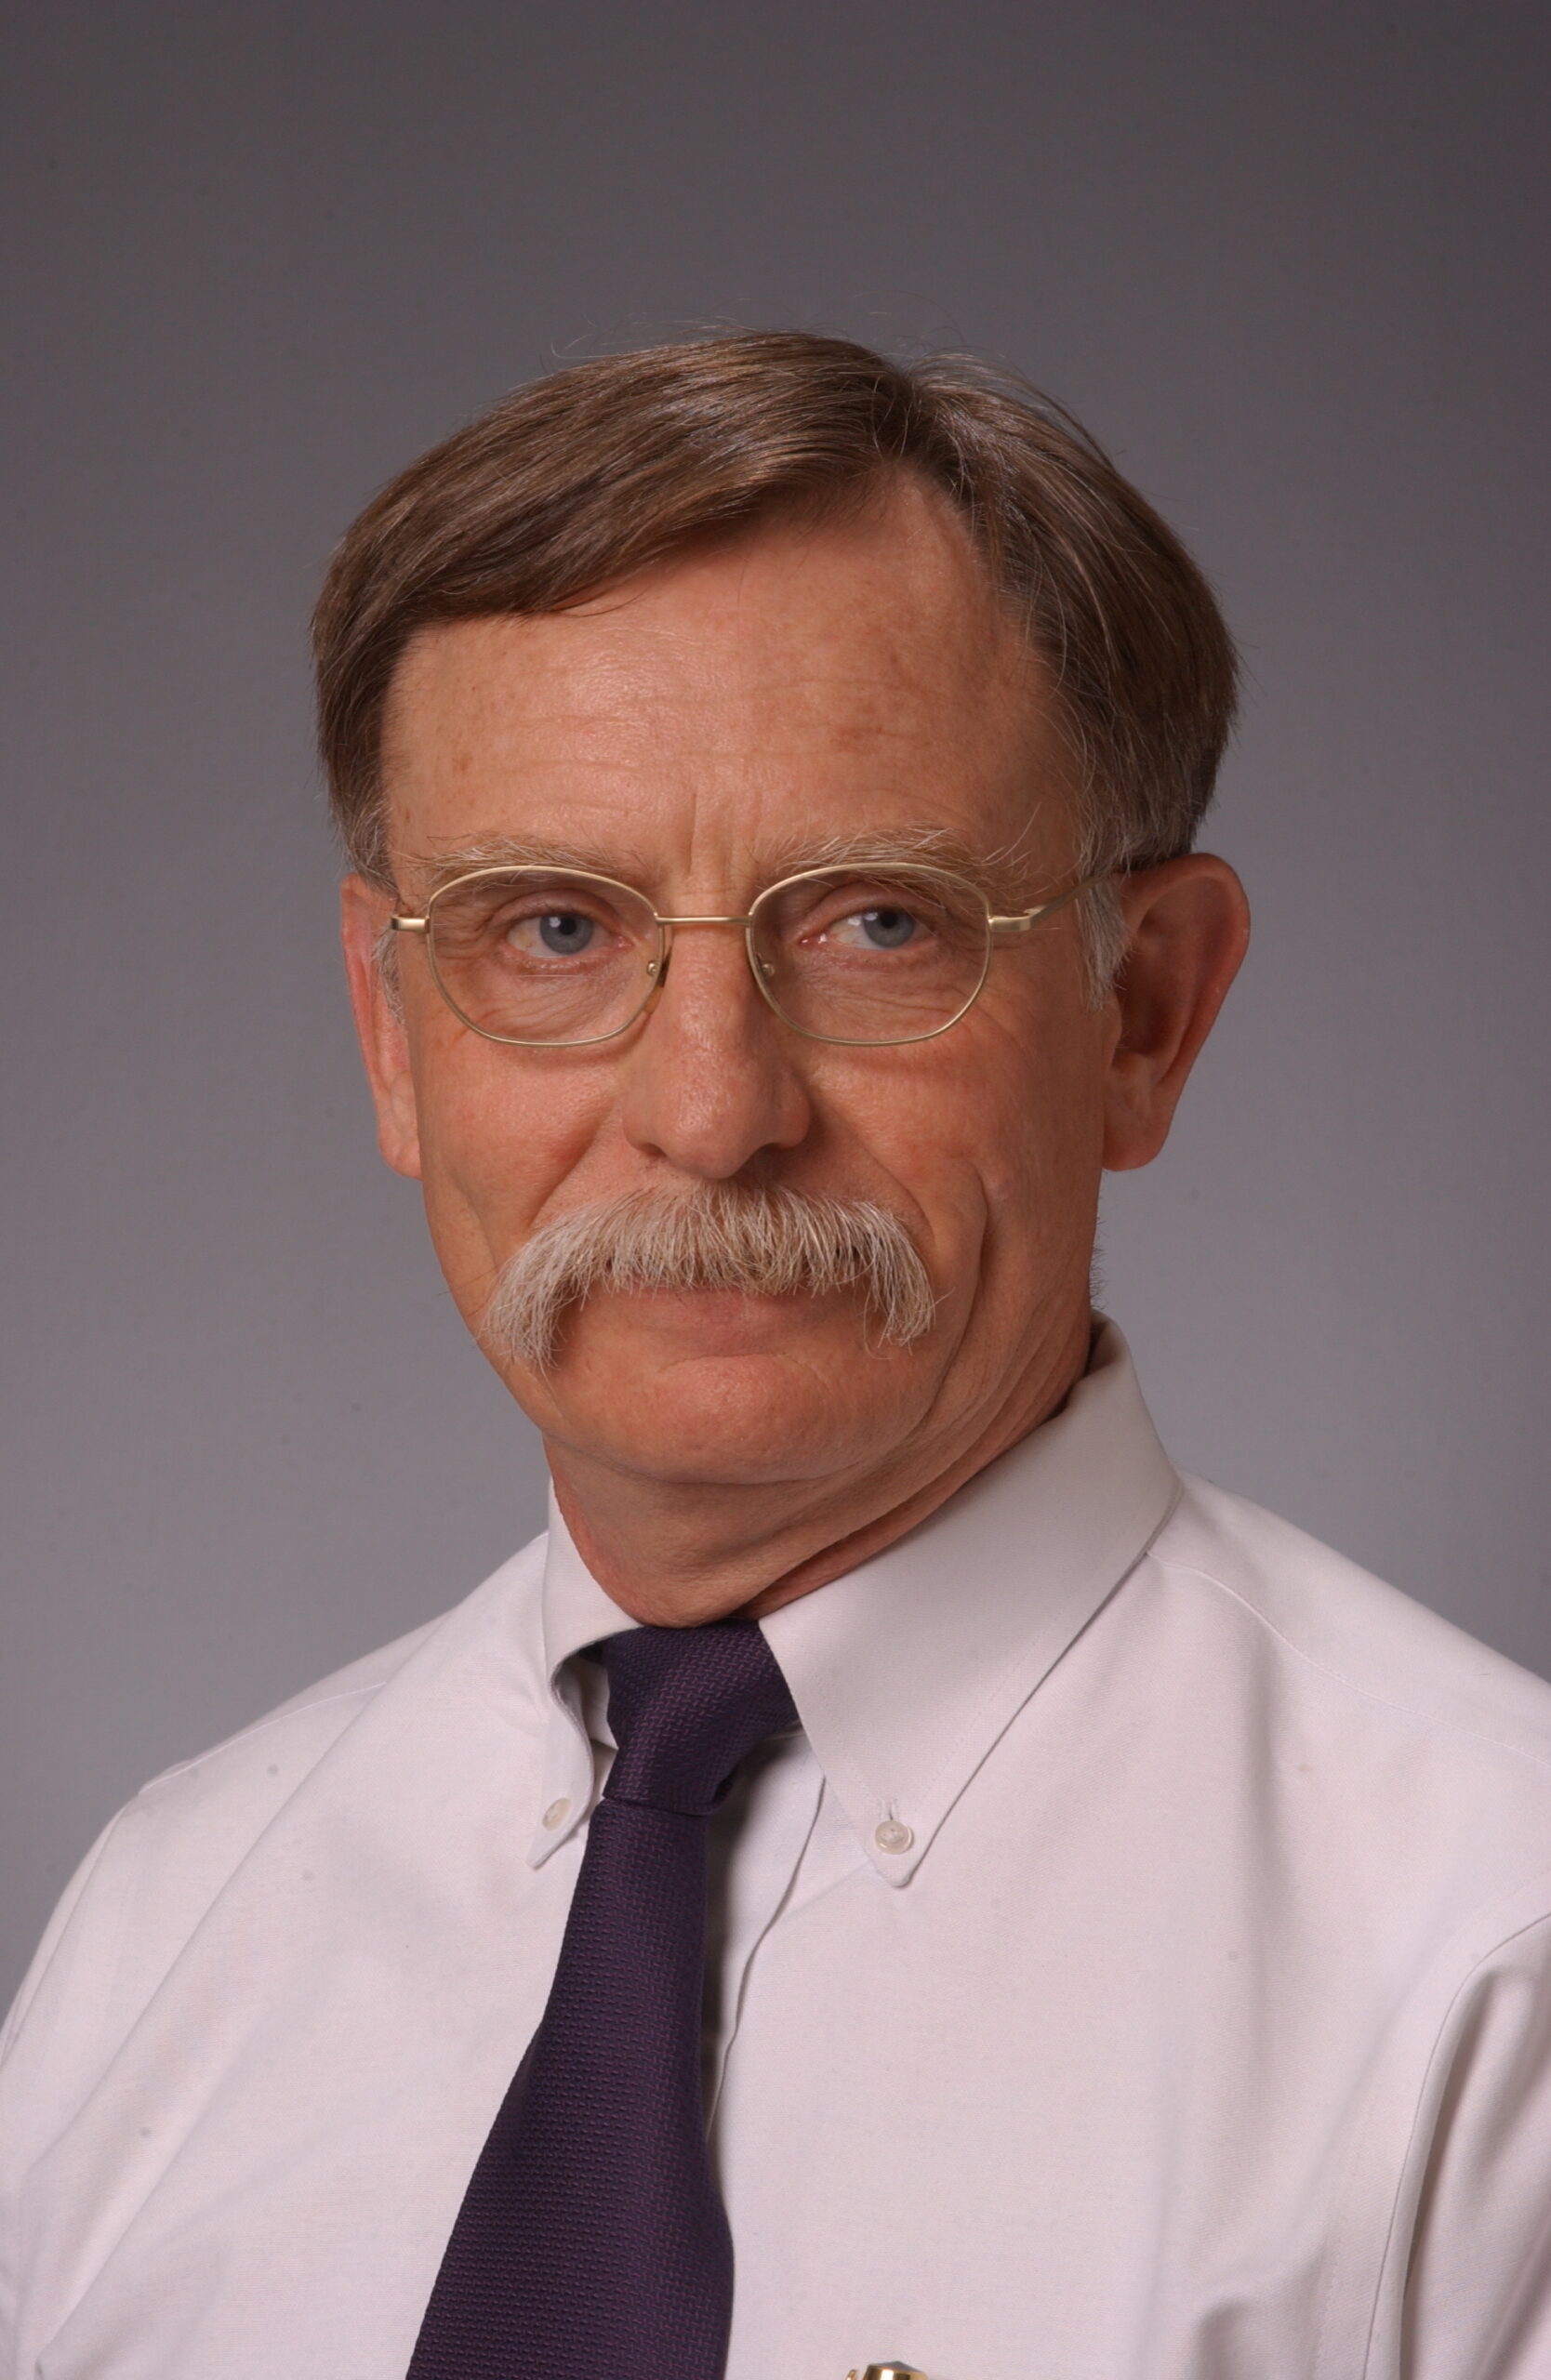 HSC's Dr. John Mills